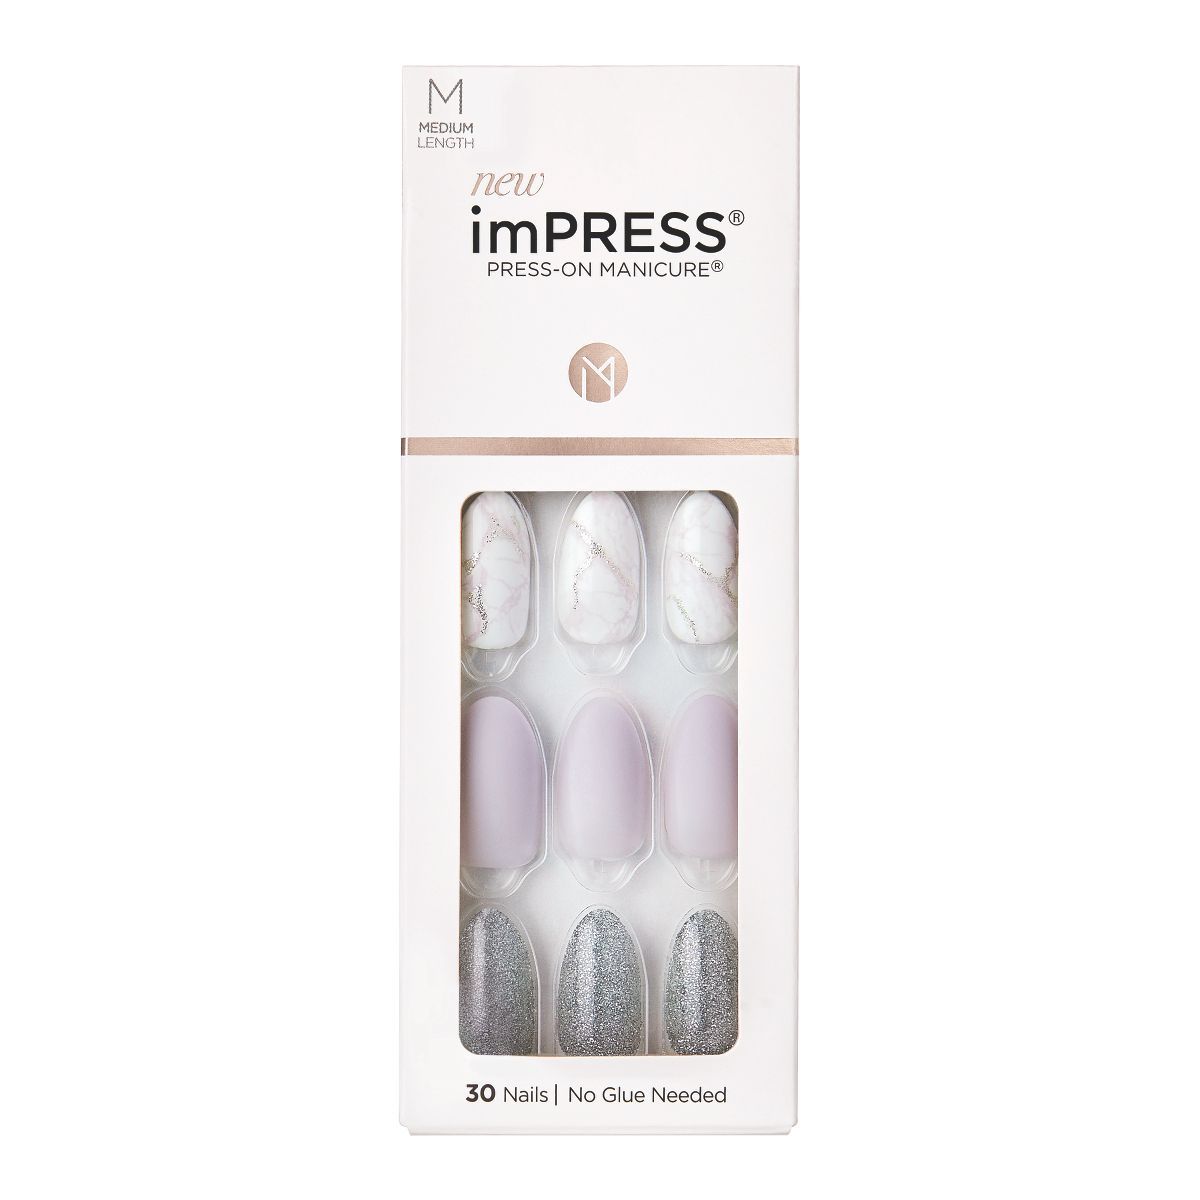 Kiss imPRESS Press-On Manicure Medium Length Fake Nails - Climb Up - 30ct | Target